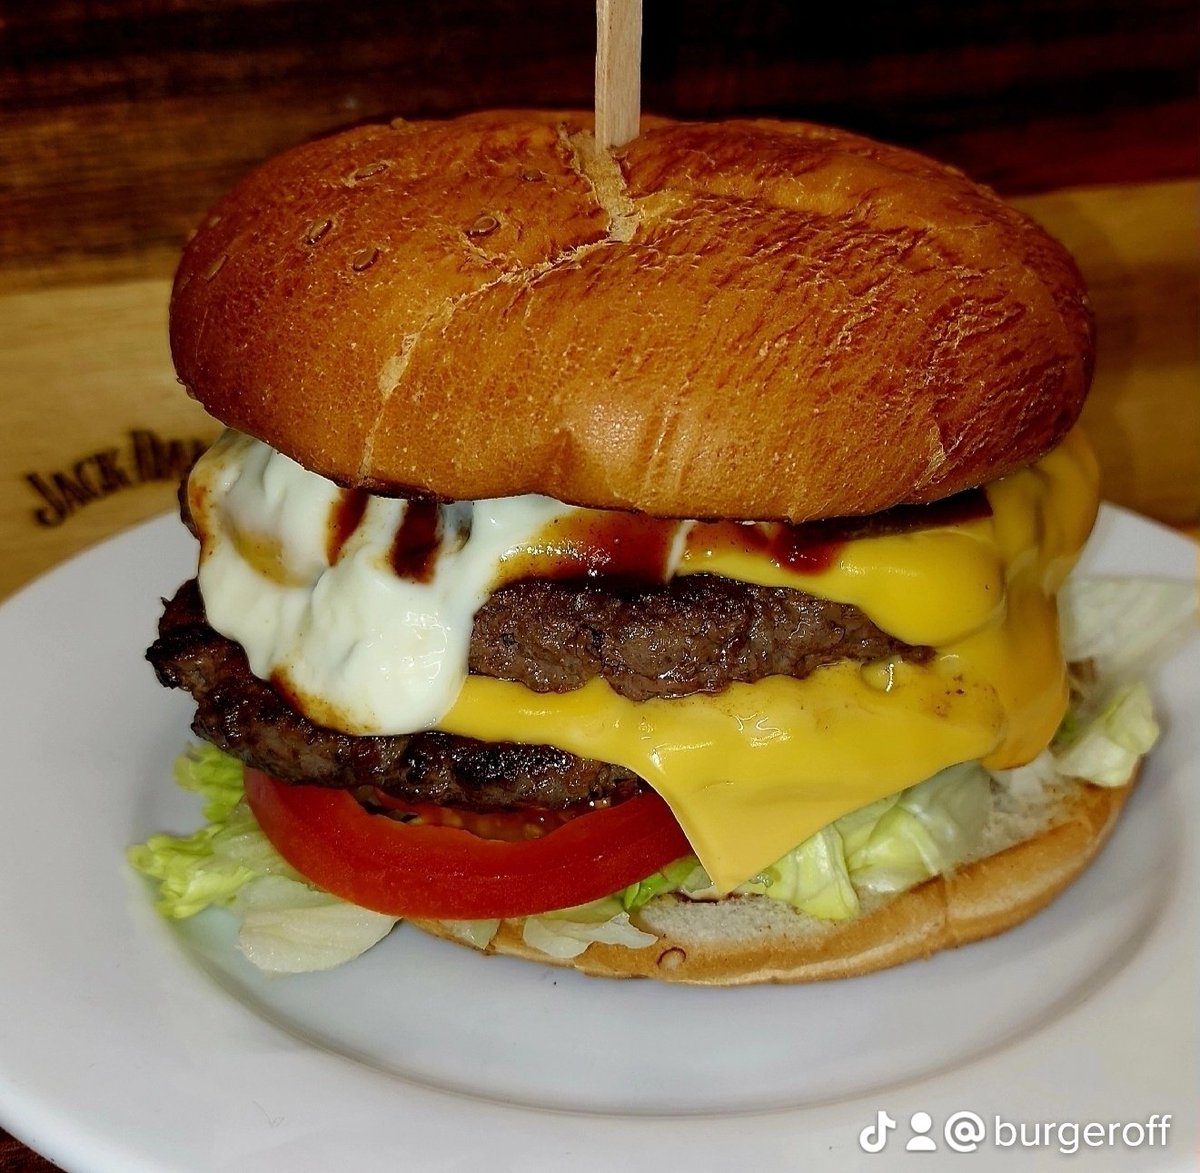 A food for every age group 😋 

#burgertime #thursday #burgerlovers #pubfoodie #burgerlife #pubfood #takeawayfood #pubfoods #pubfoodandbeer #burgerandfries #burgerlicious #burgers #bestburgers #burgersandbeer #takeaway #thursdaynight #burgerlove #burgerlover #brighton #burger